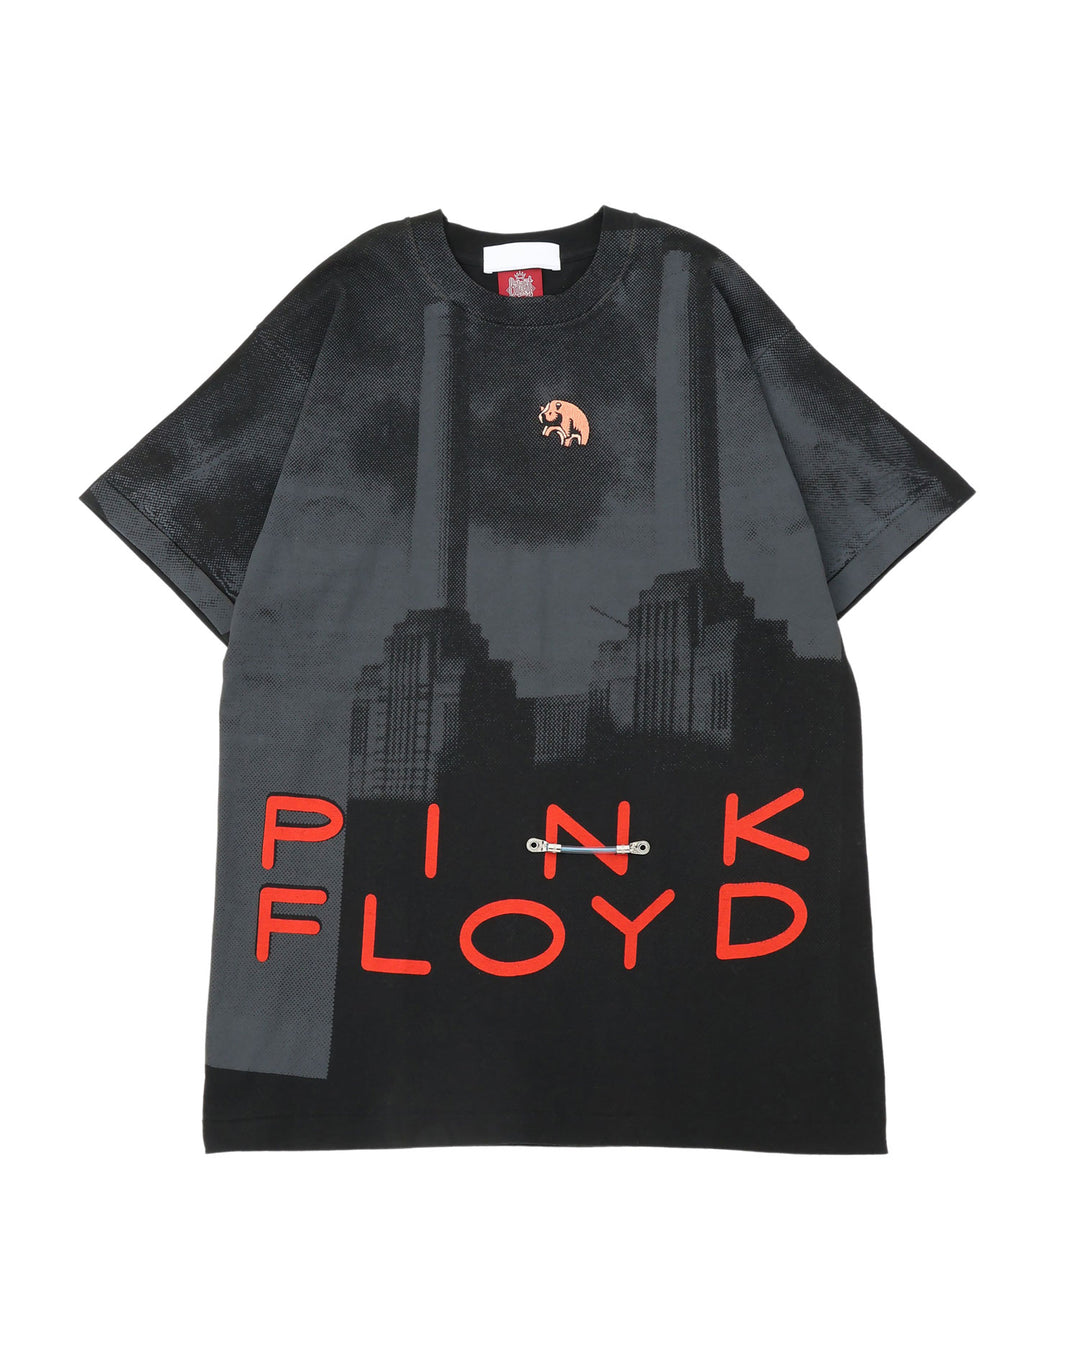 PINK FLOYD T-Shirt / Black